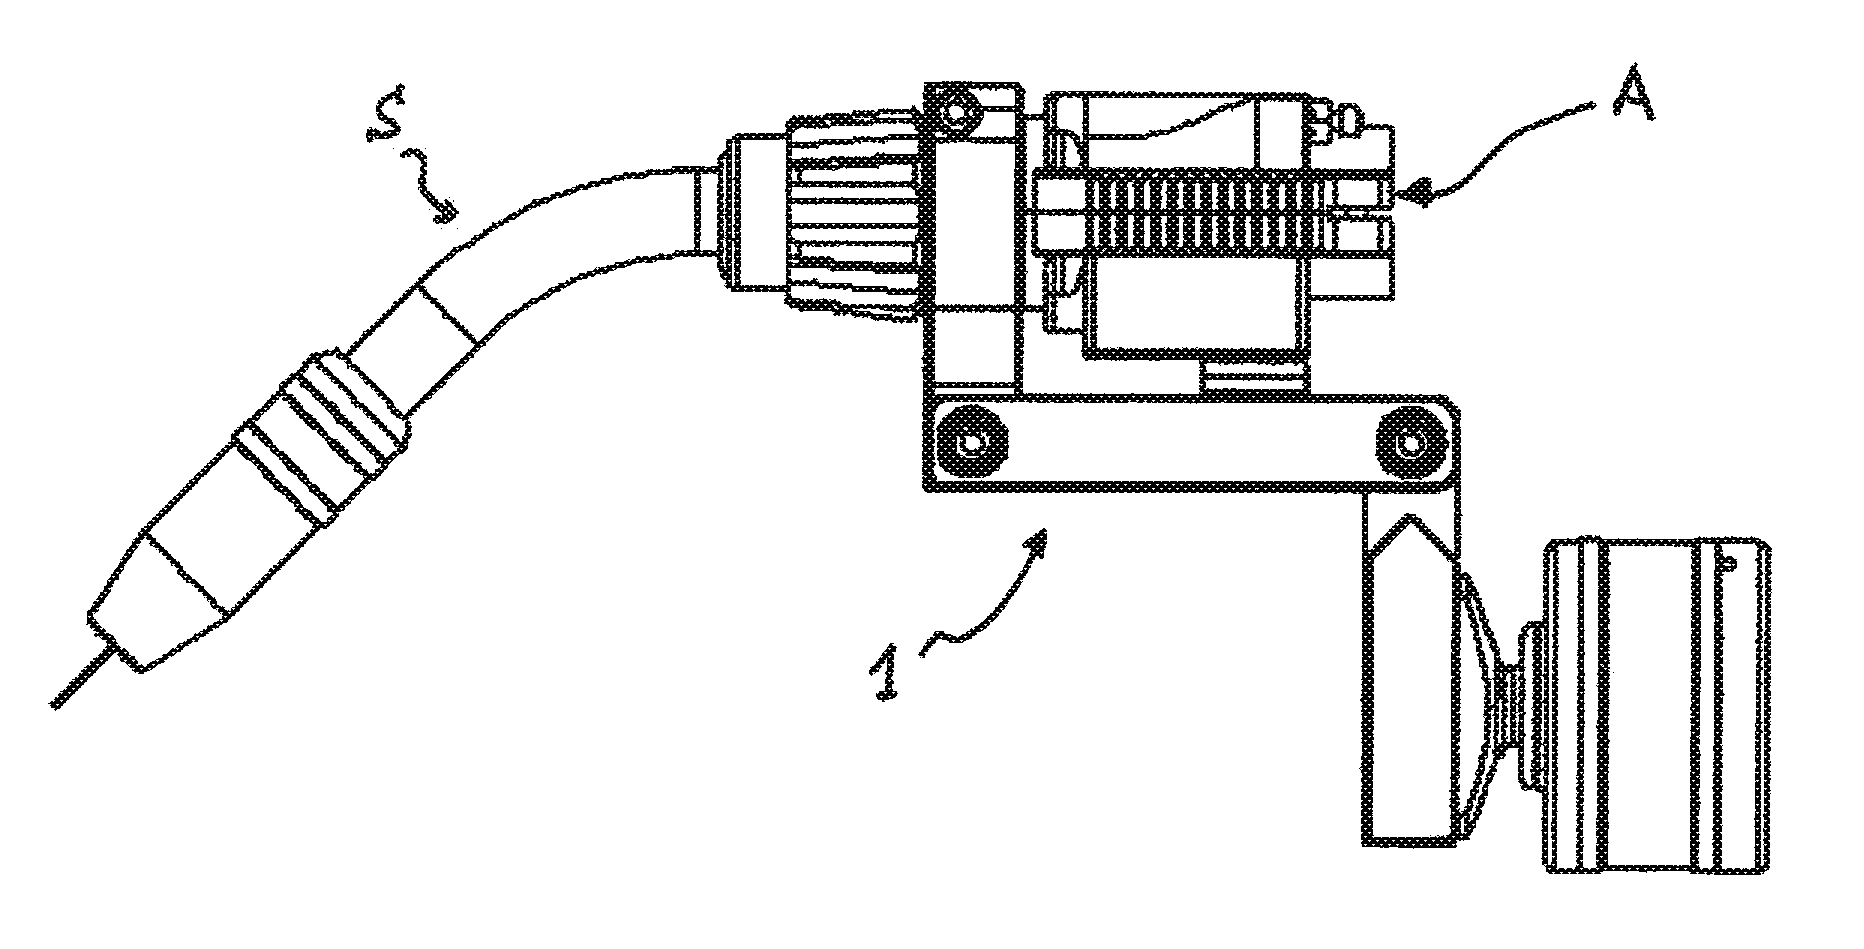 Mount for a welding gun for connecting said welding gun to an arm of a welding robot